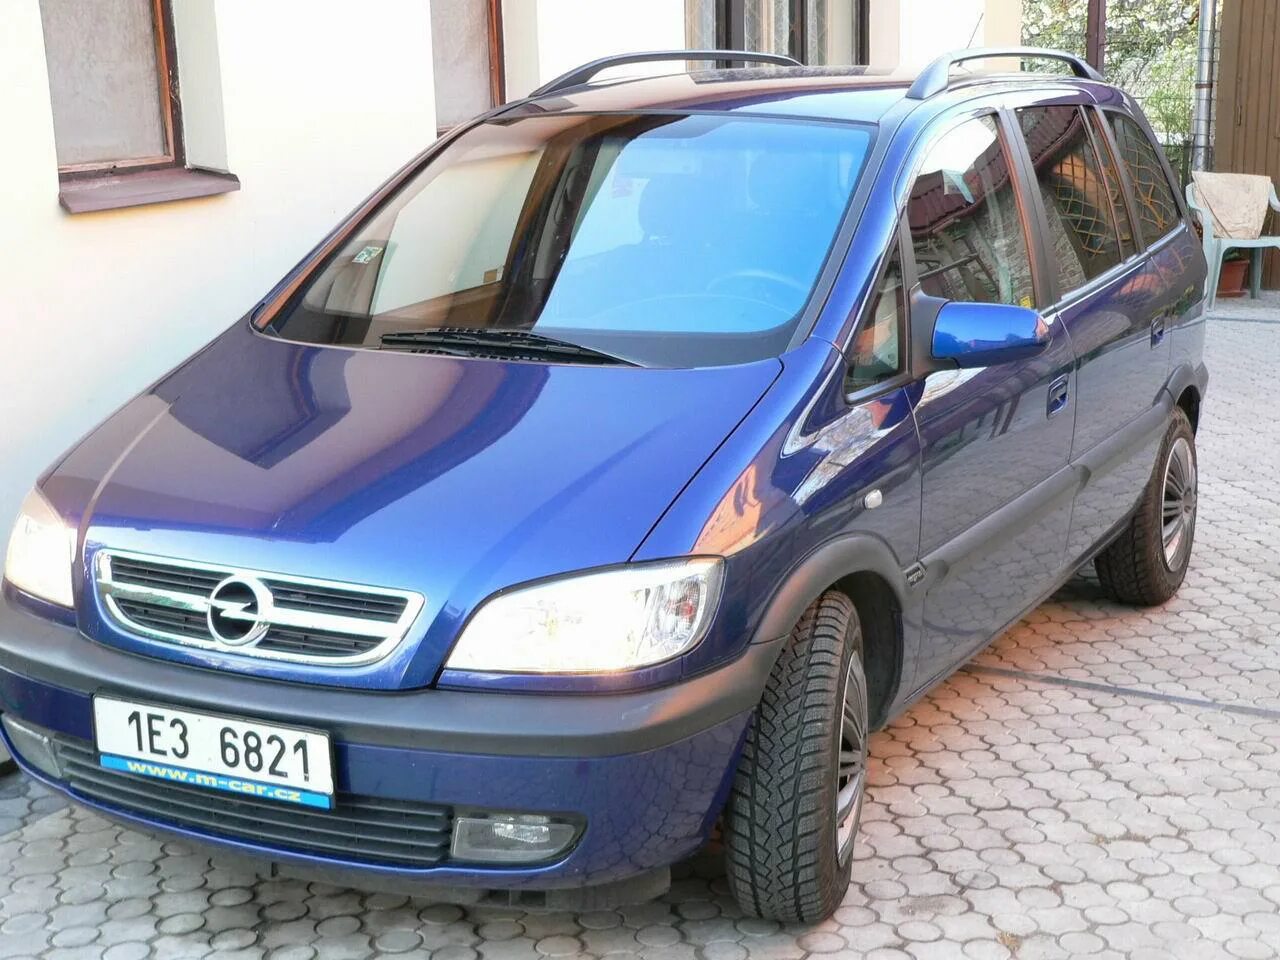 Opel Zafira 2.2. Опель Зафира а 2.2. Opel Zafira 2004. Опель Зафира 2004. Опель зафира 2.2 купить